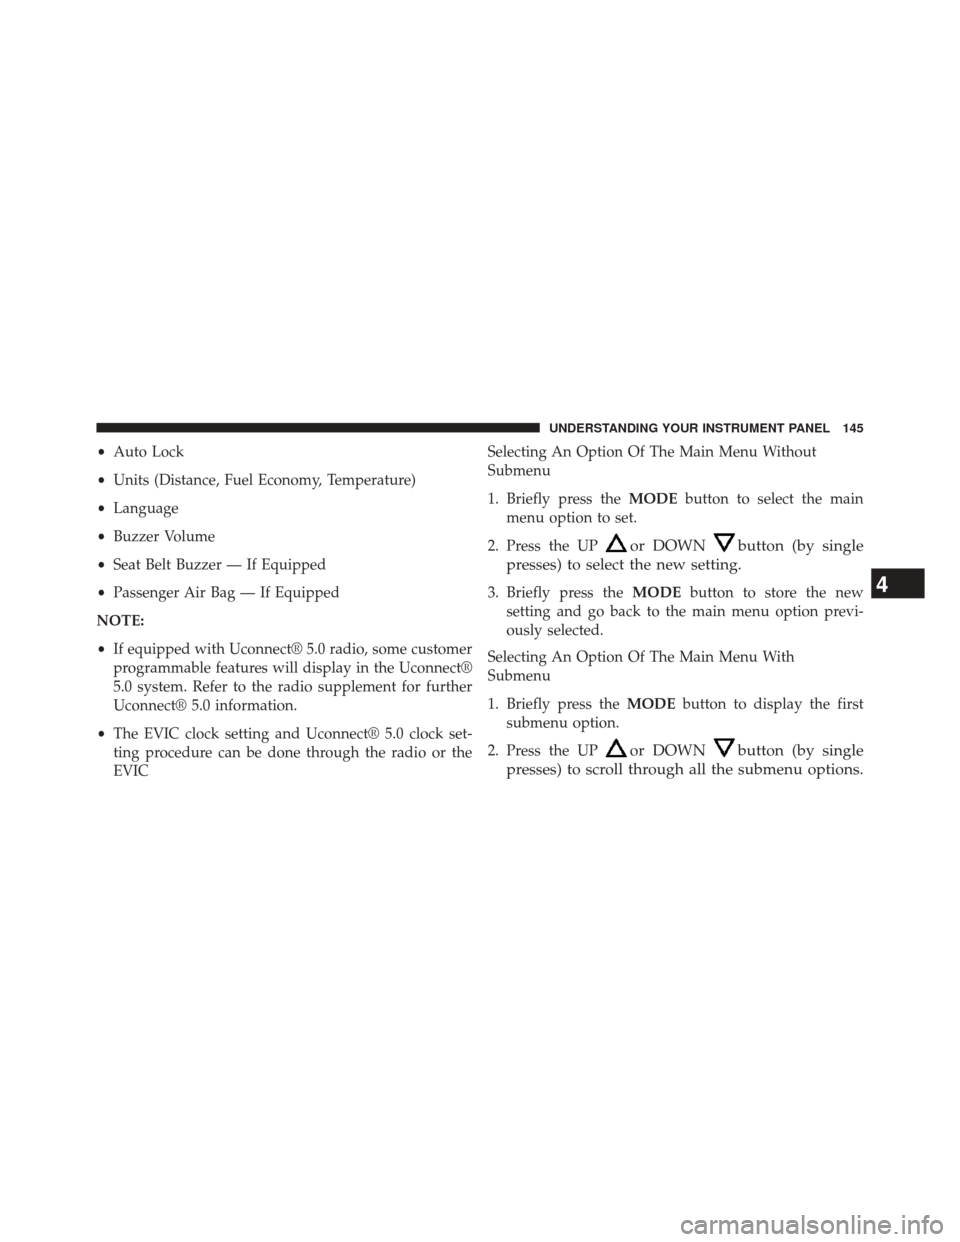 Ram ProMaster 2014  Owners Manual •Auto Lock
• Units (Distance, Fuel Economy, Temperature)
• Language
• Buzzer Volume
• Seat Belt Buzzer — If Equipped
• Passenger Air Bag — If Equipped
NOTE:
• If equipped with Uconne